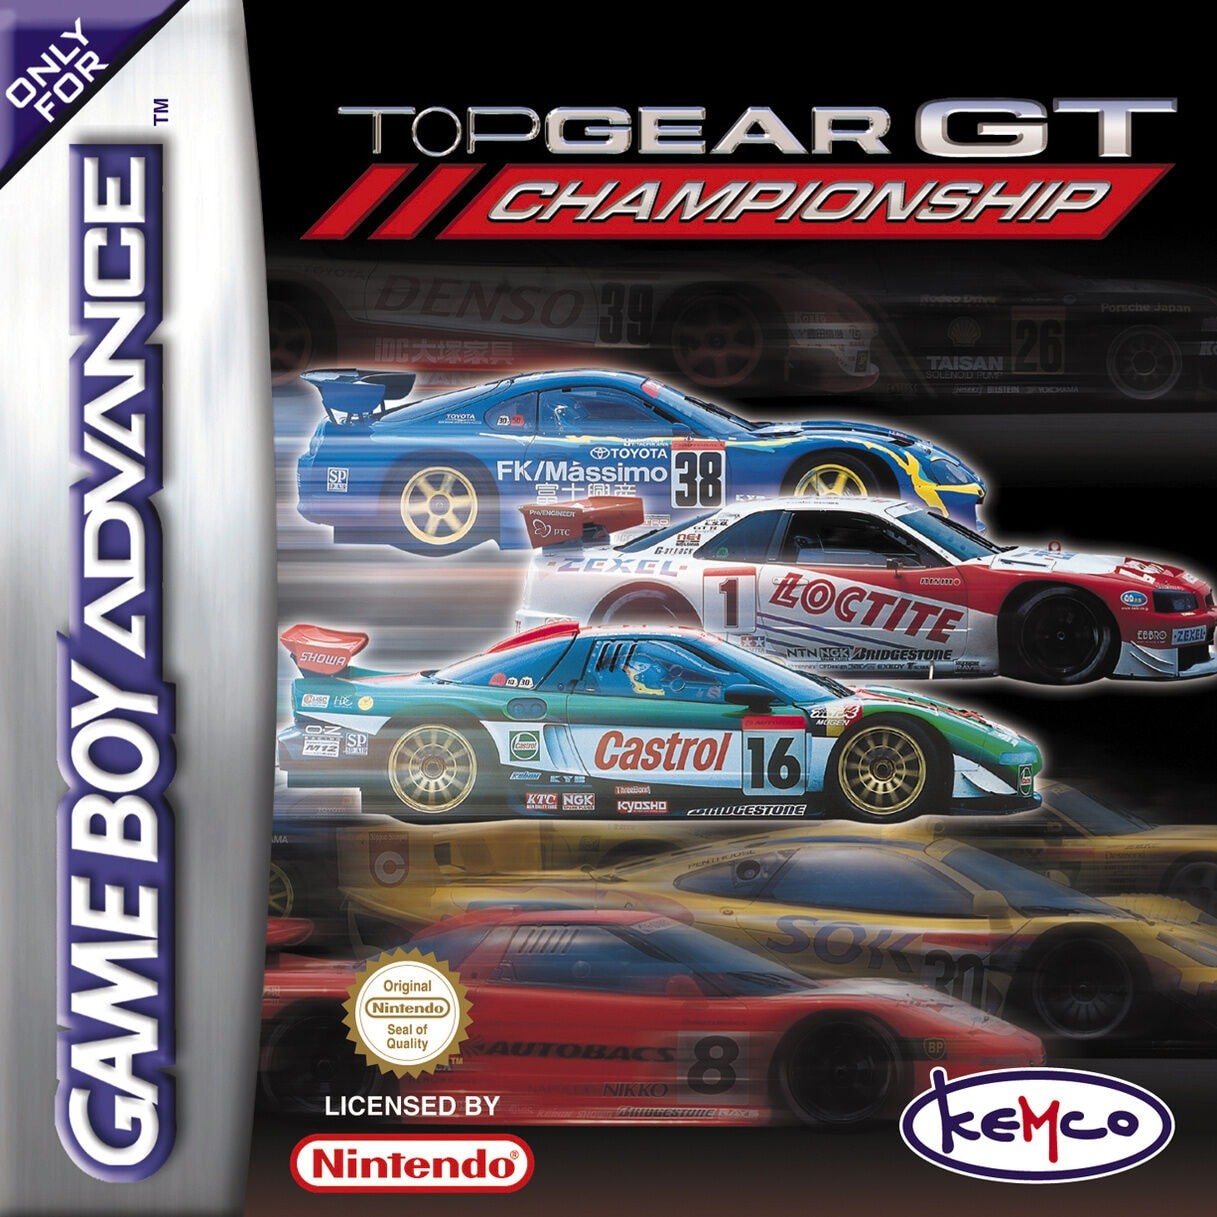 Capa do jogo Top Gear GT Championship